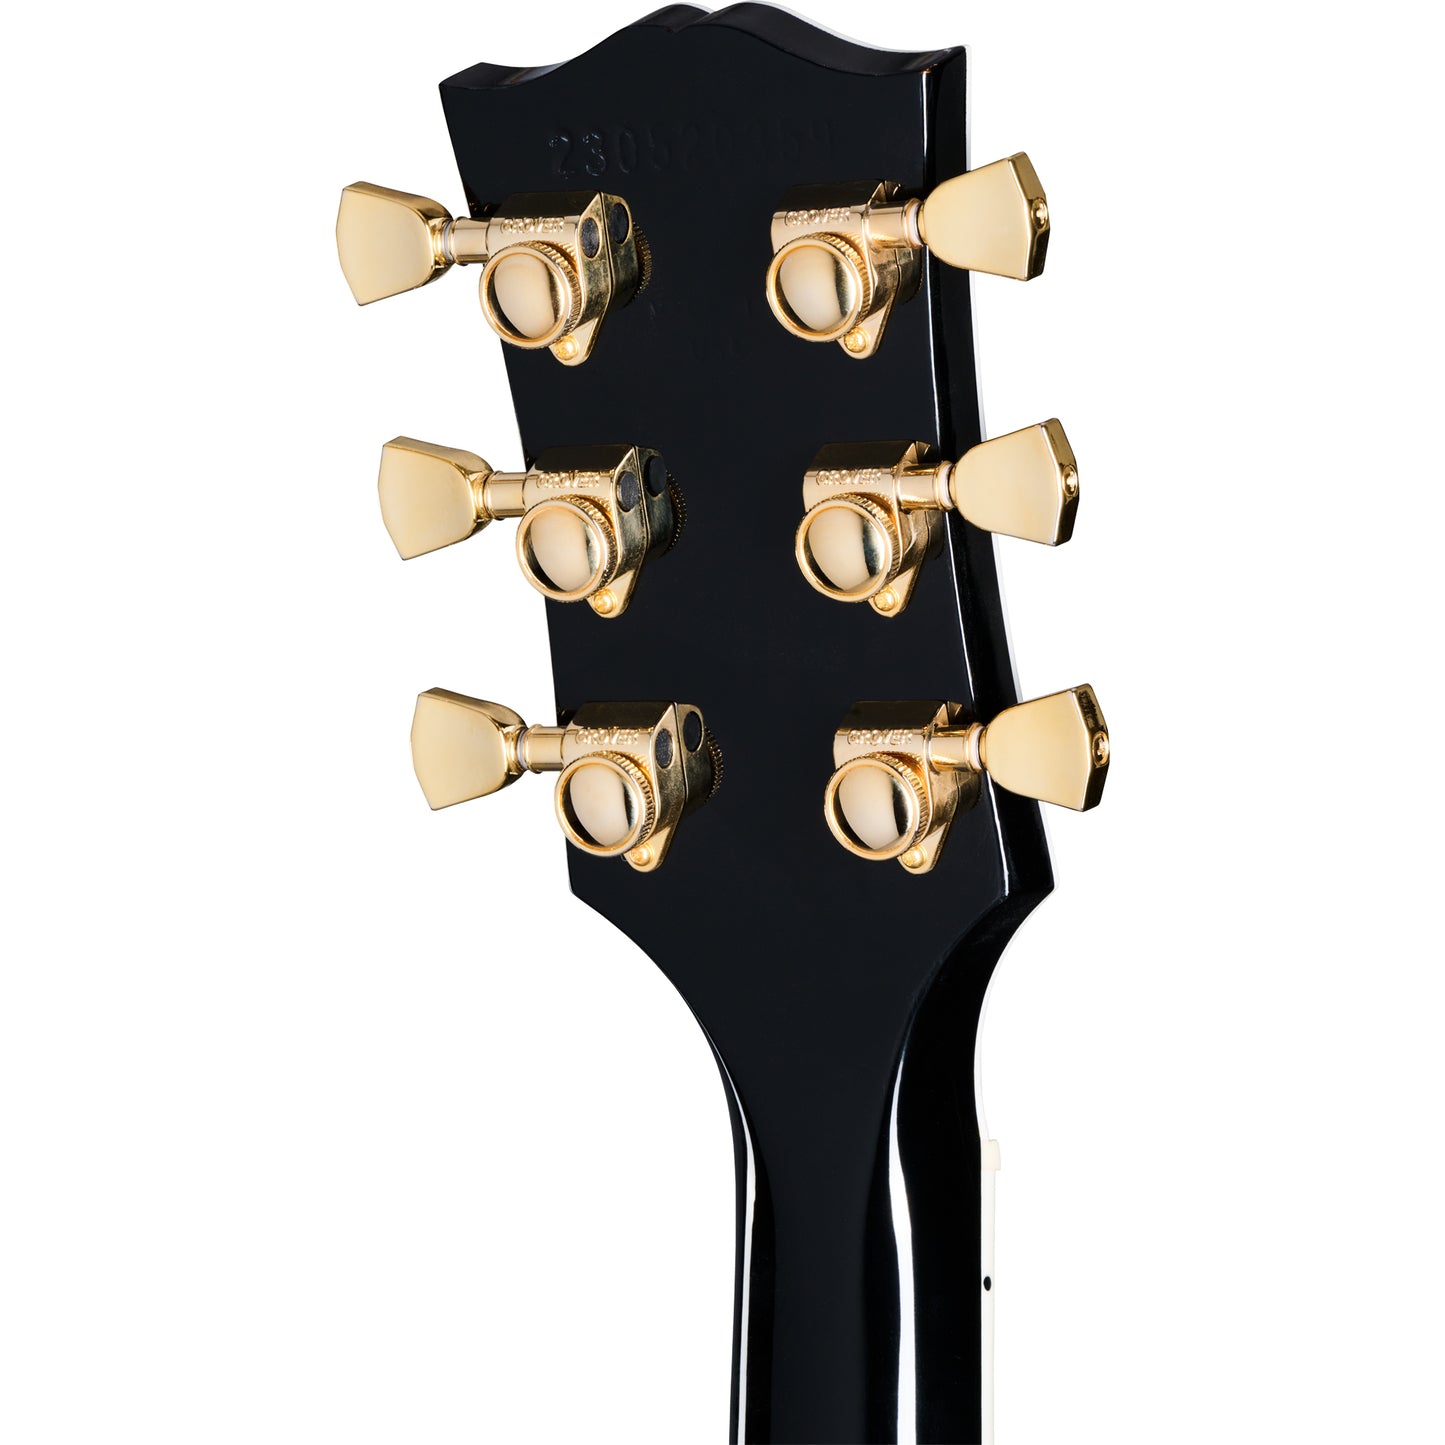 Gibson SG Supreme Electric Guitar - Translucent Ebony Burst